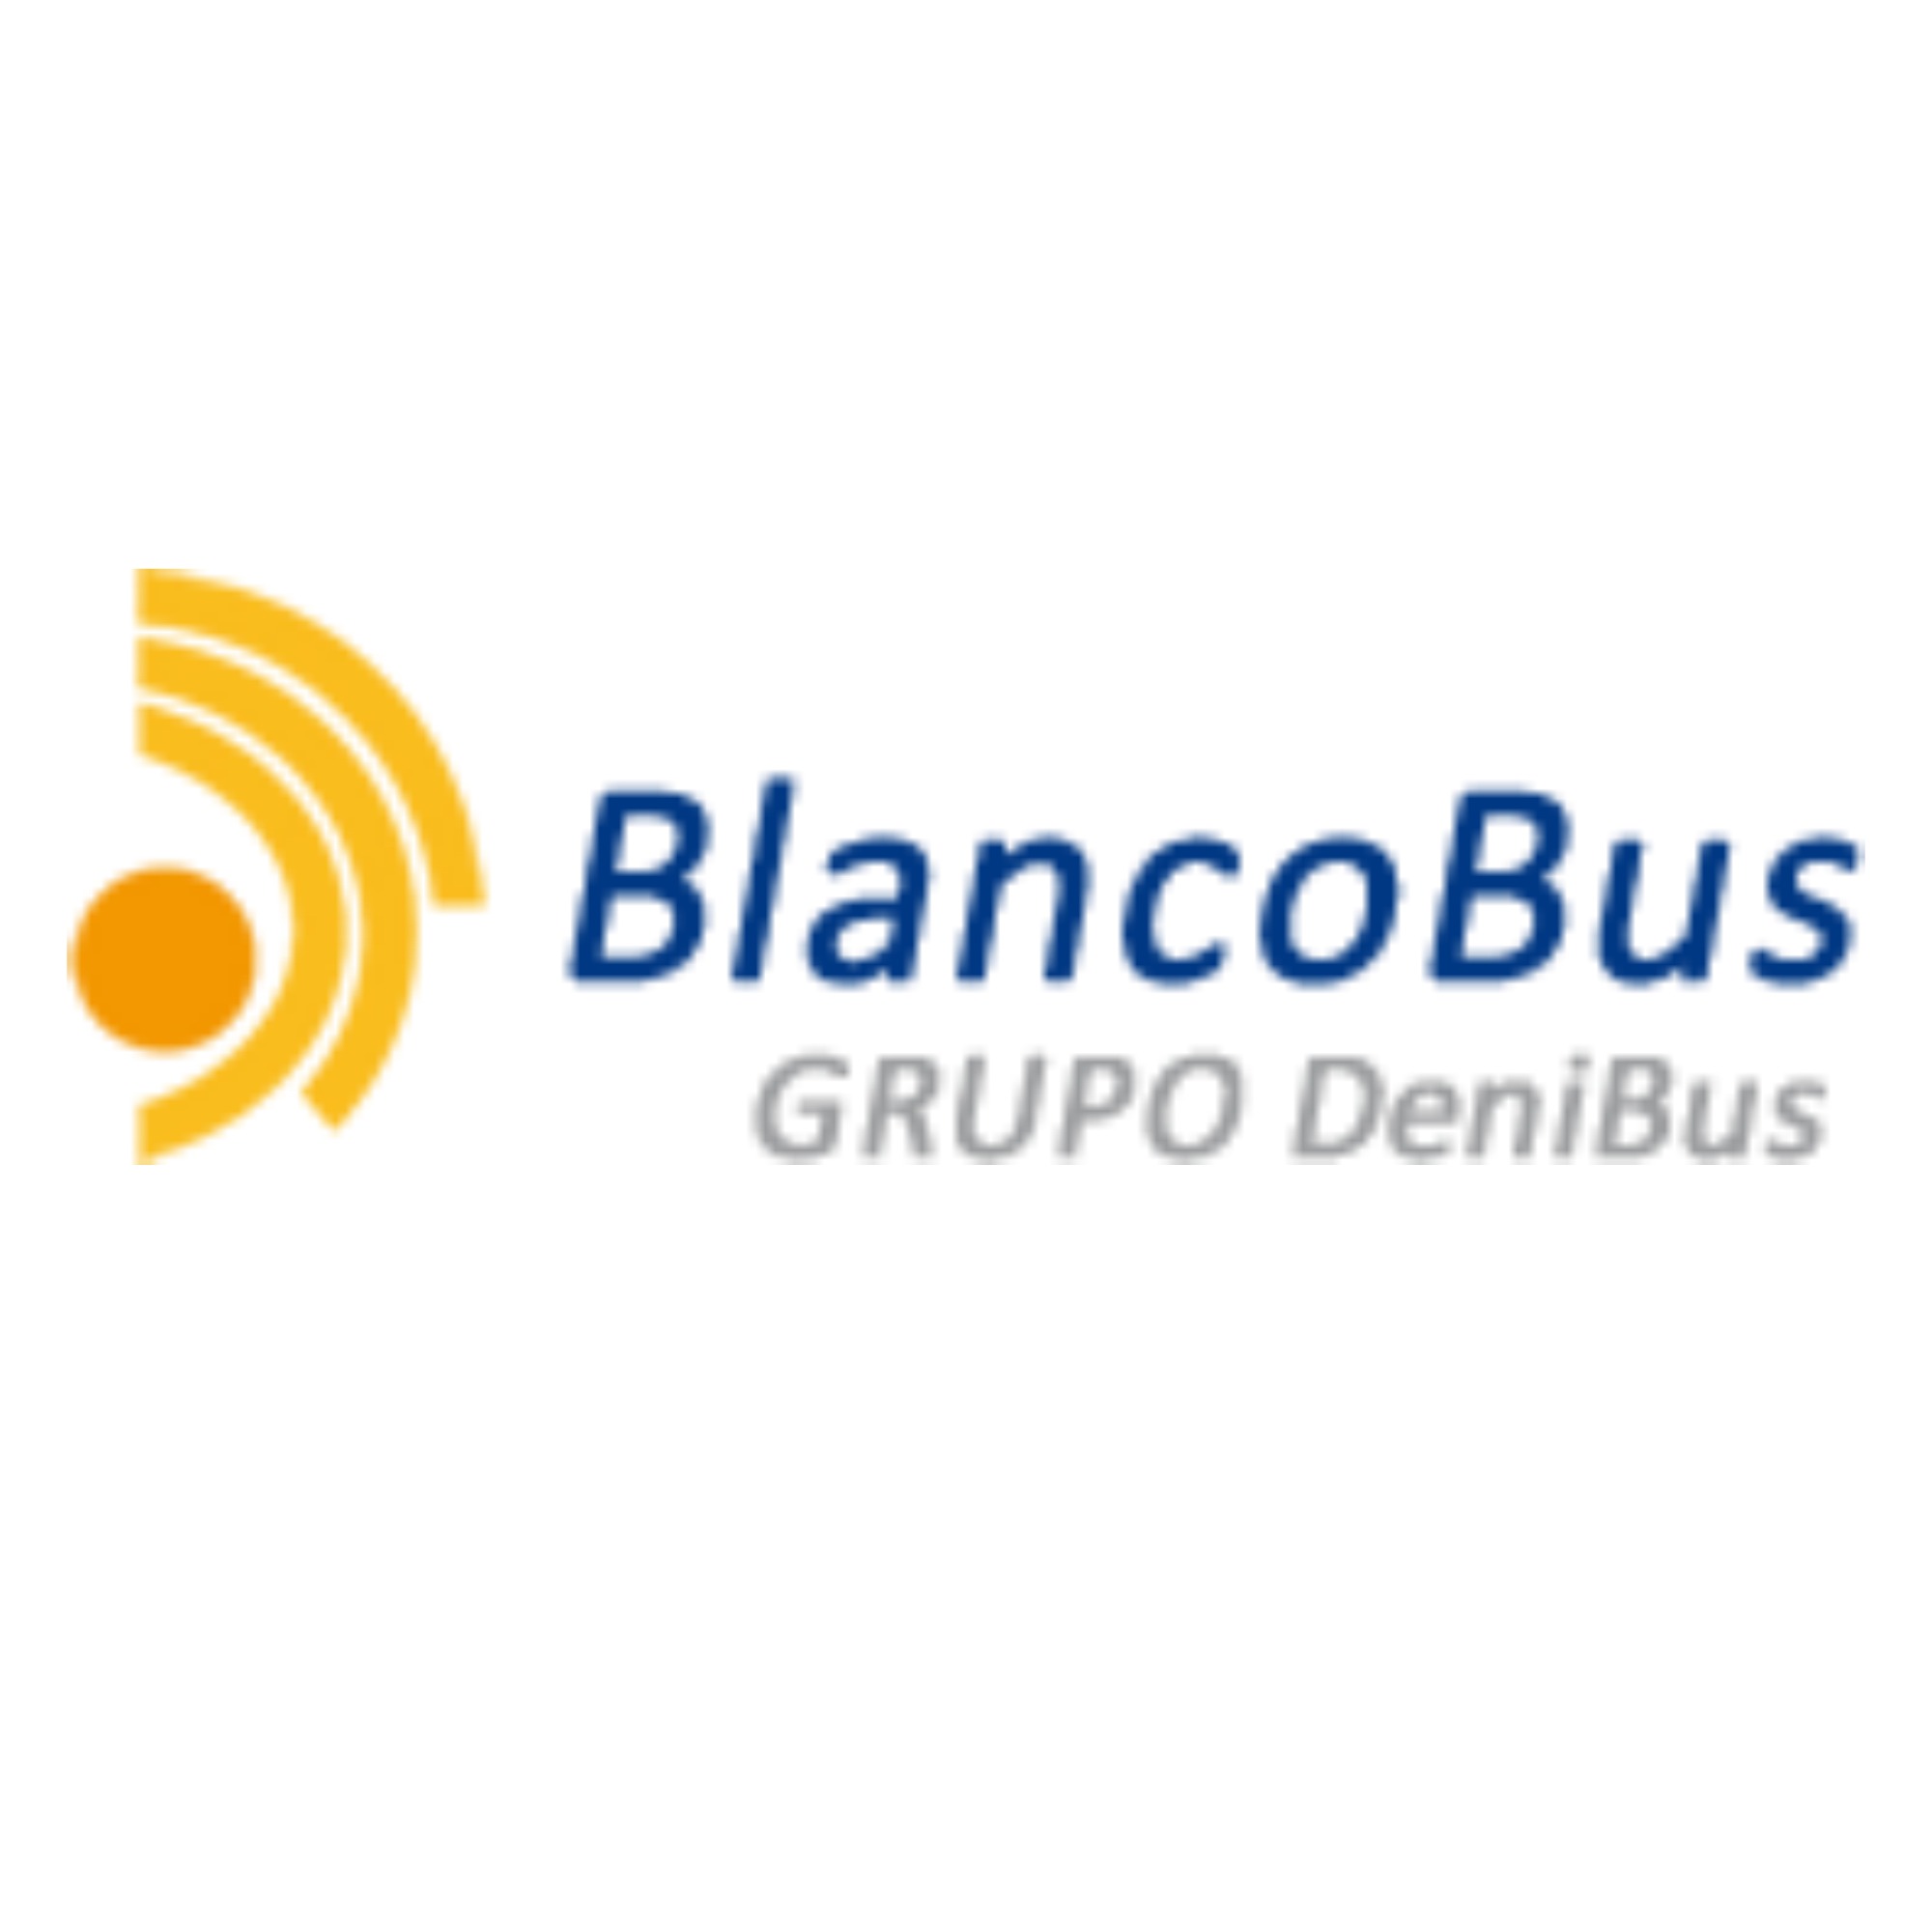  Blanco Bus 